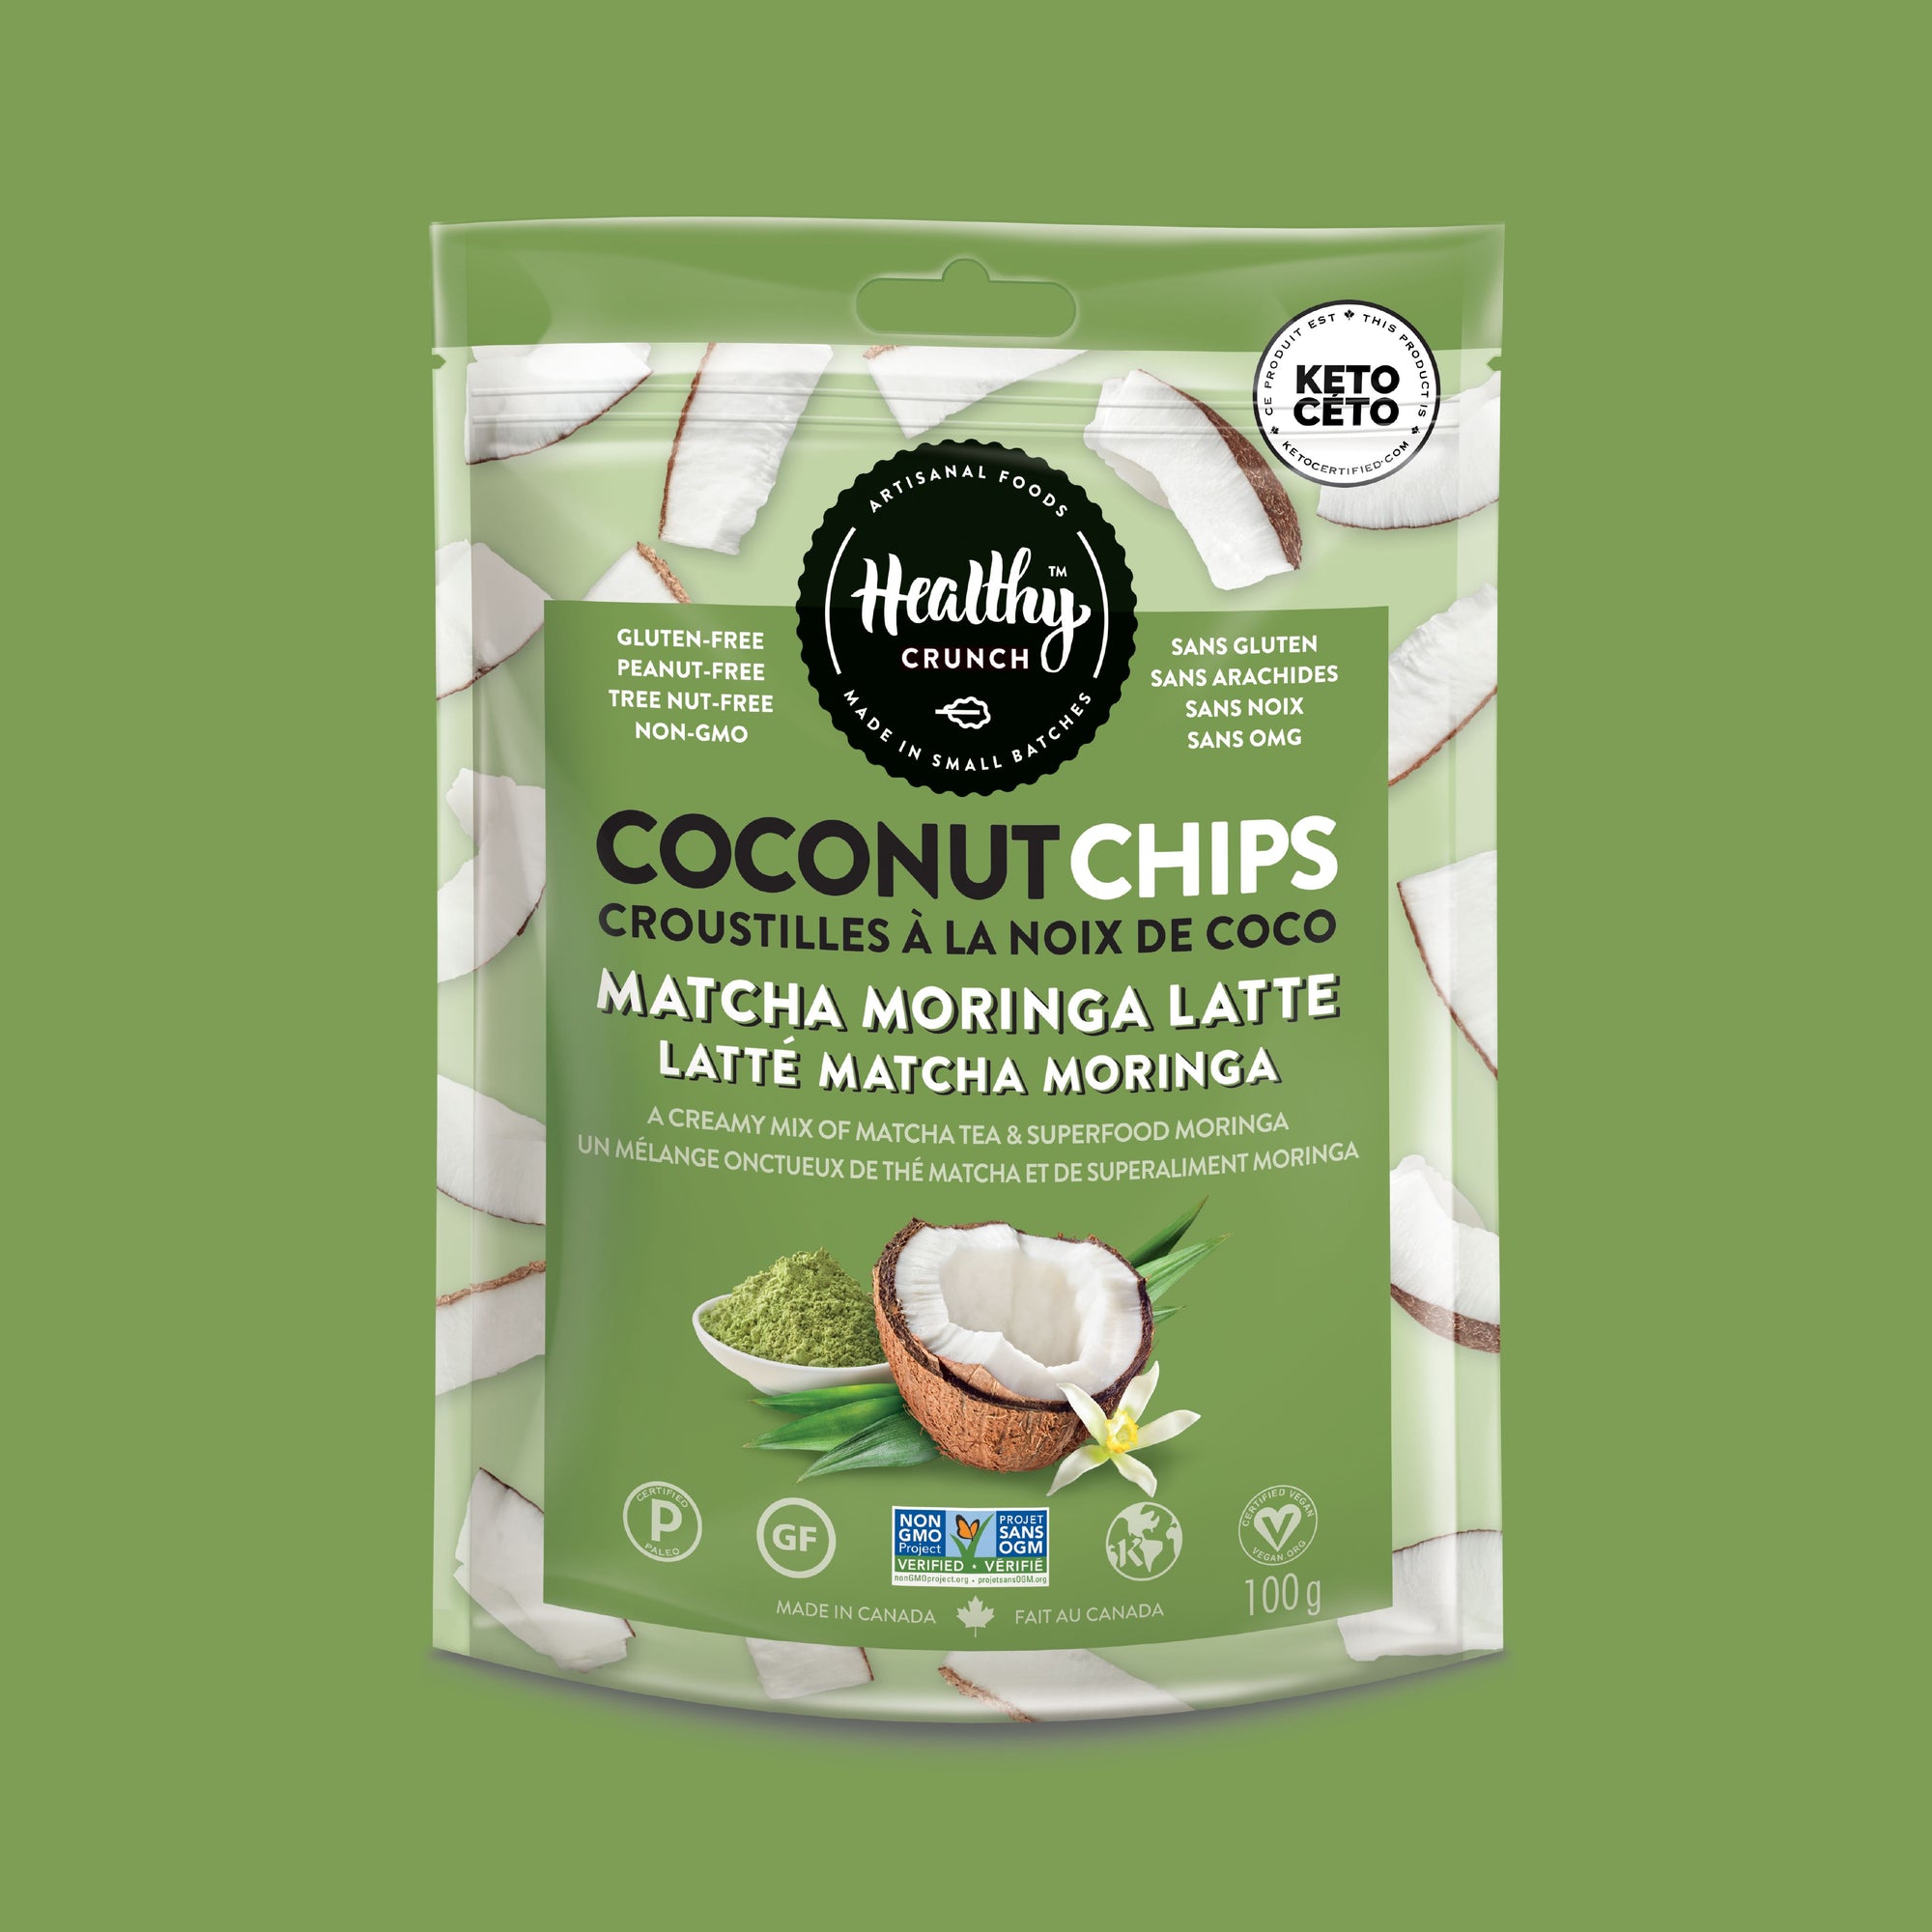 Matcha Moringa Latte Coconut Chips